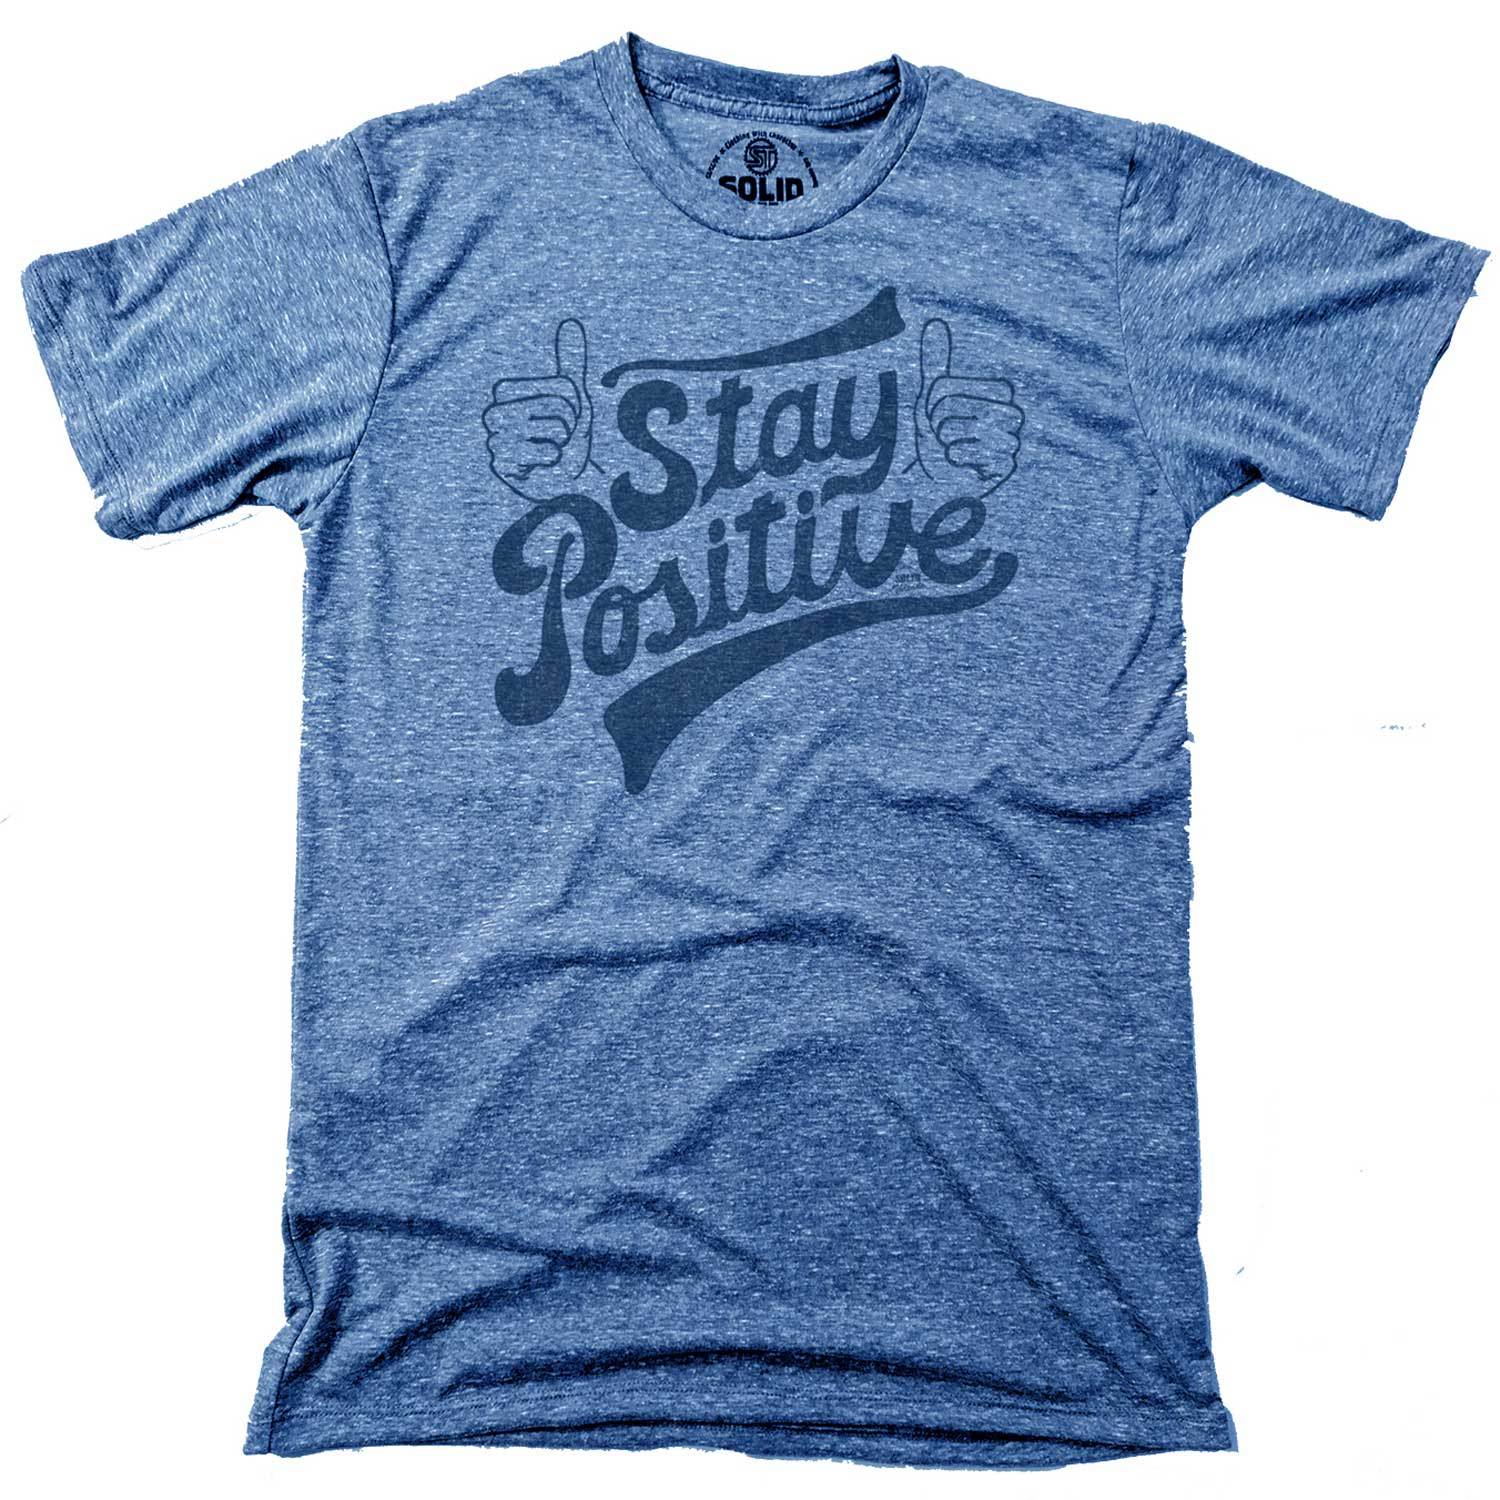 Take It Slow Retro Turtle Graphic T-Shirt